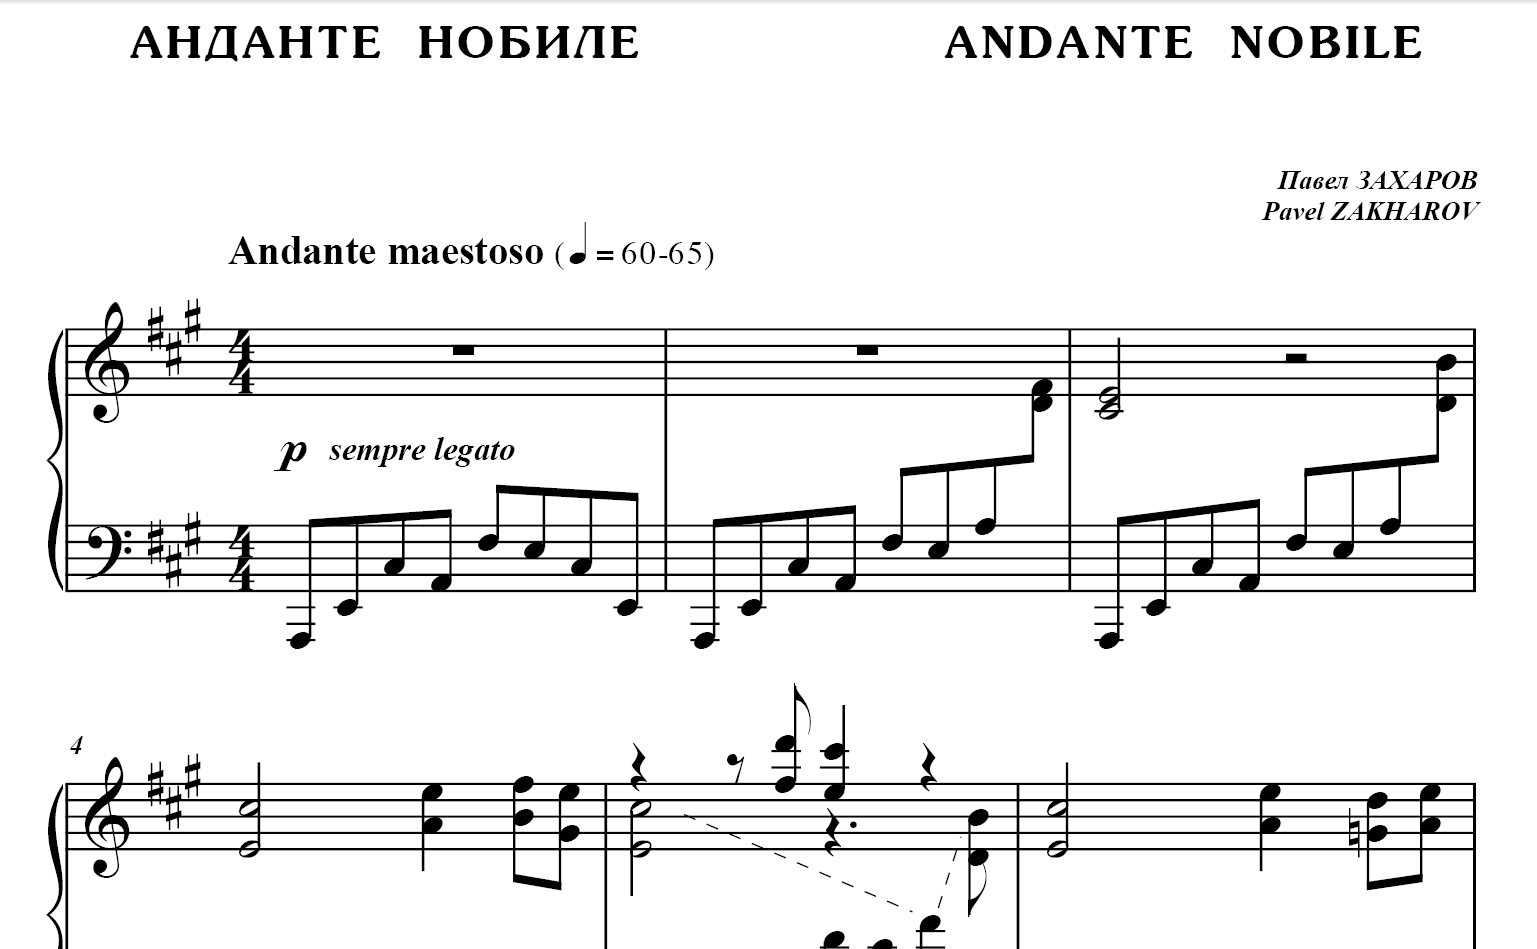 5s15 Andante nobile, PAVEL ZAKHAROV / piano